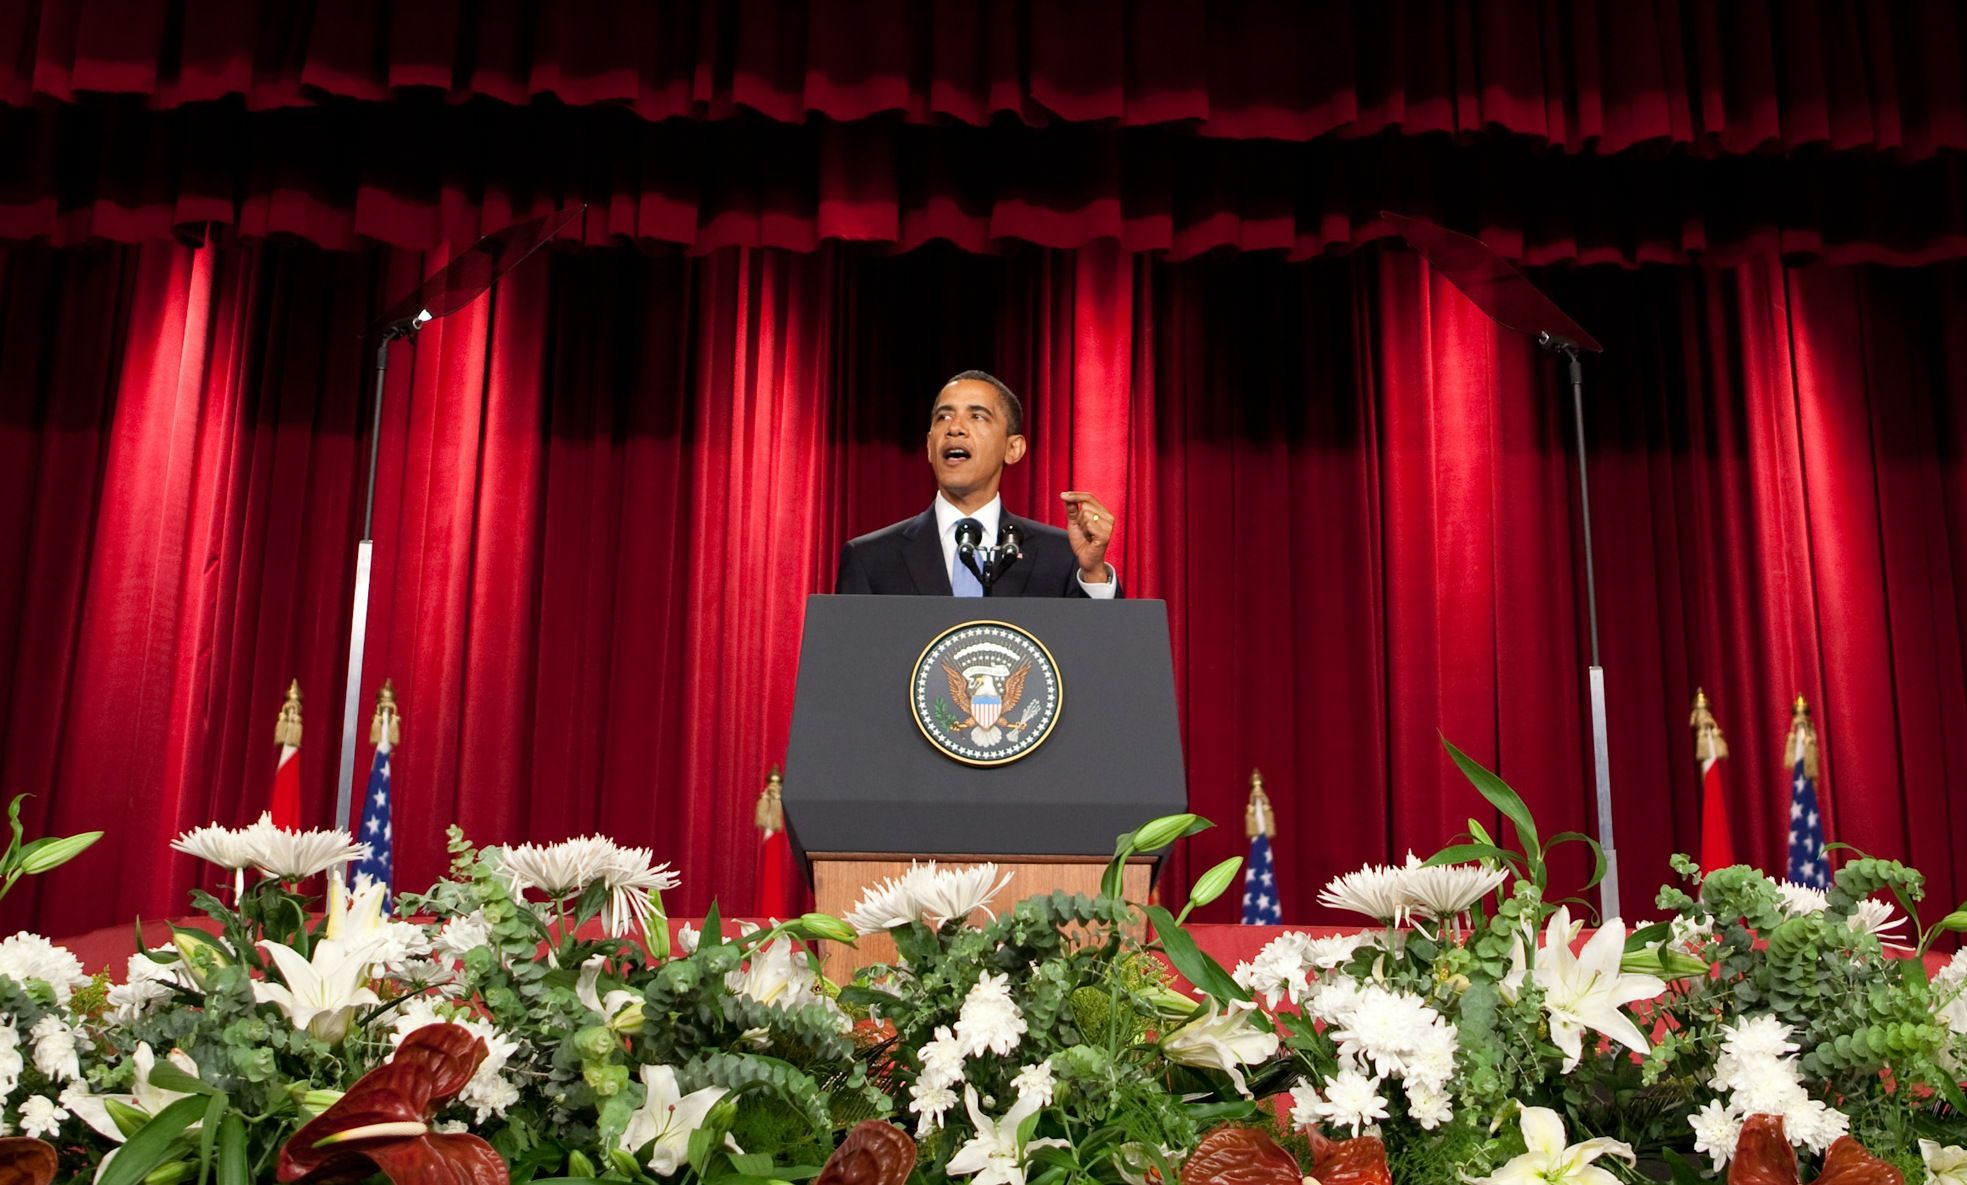 Speech by U.S. President Barack Obama at Cairo University